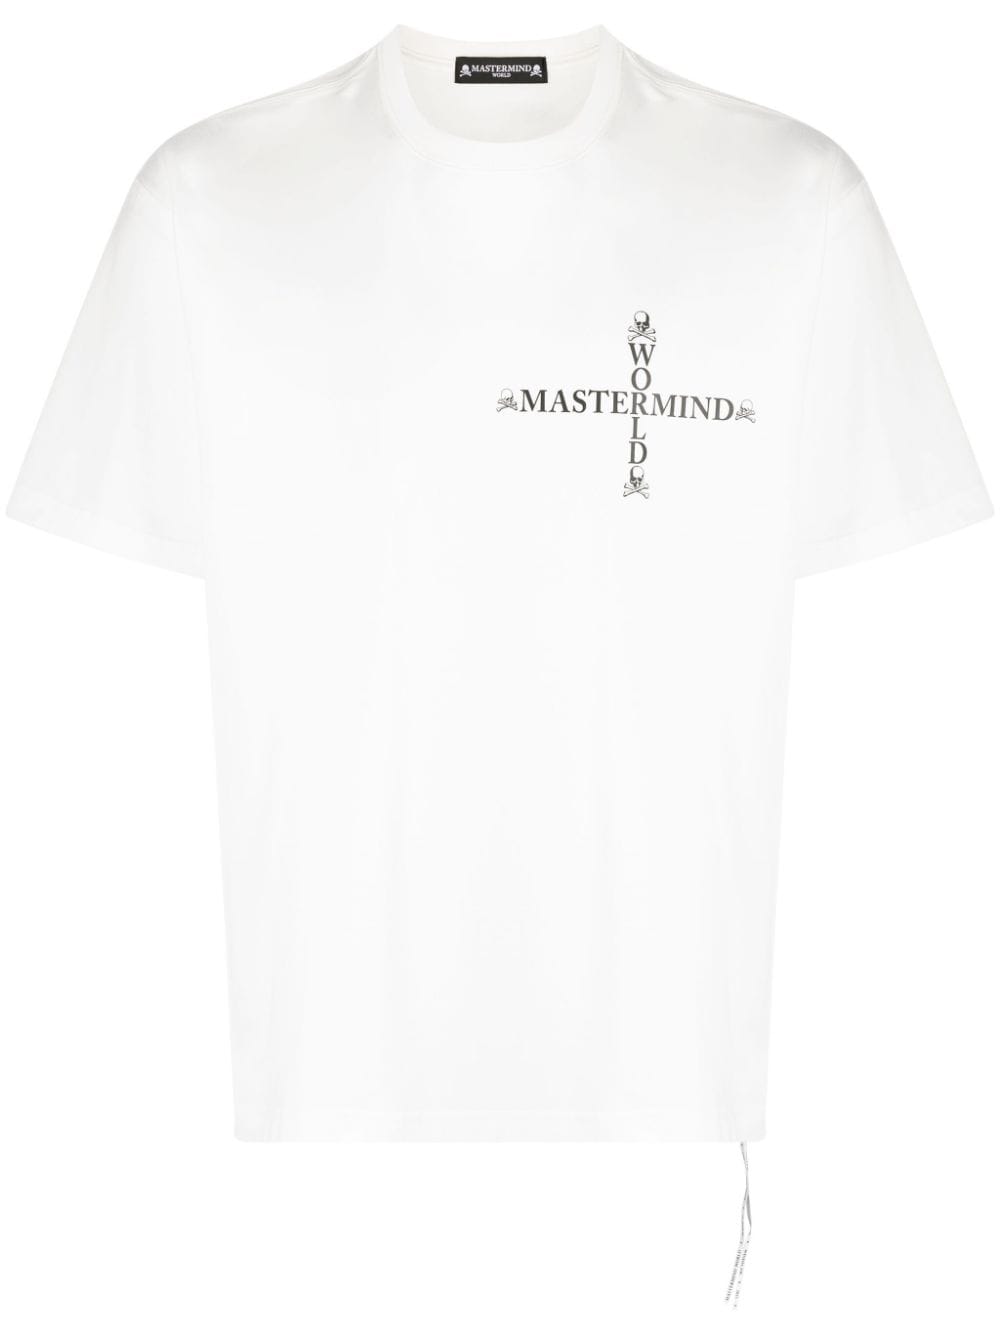 Stone Island – T-Shirt White 2NS91